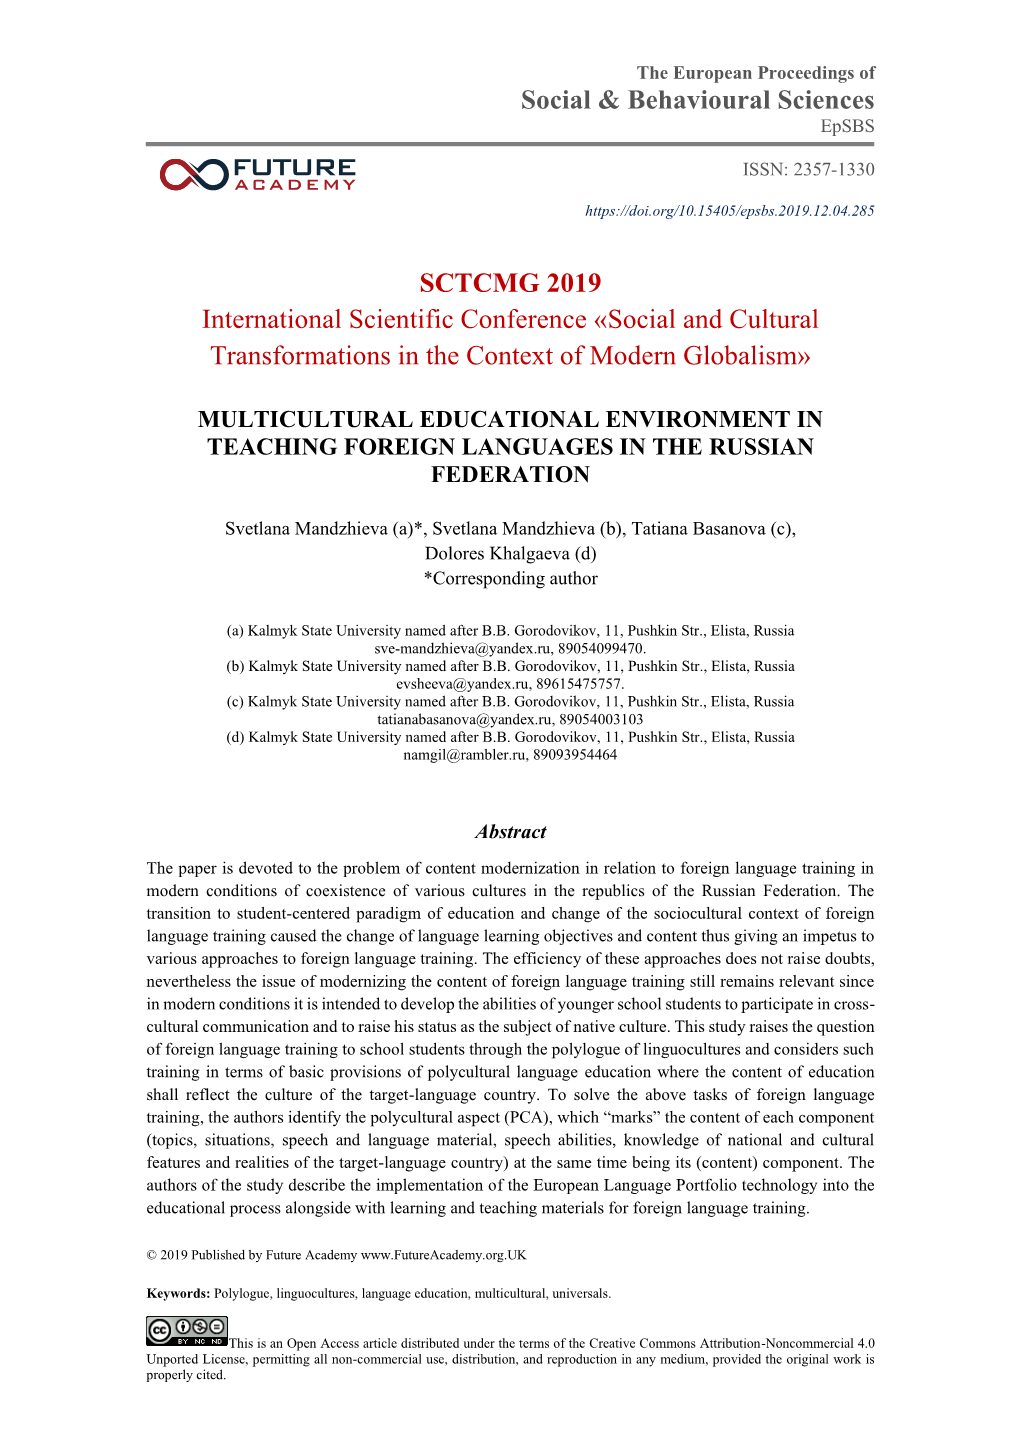 Social & Behavioural Sciences SCTCMG 2019 International